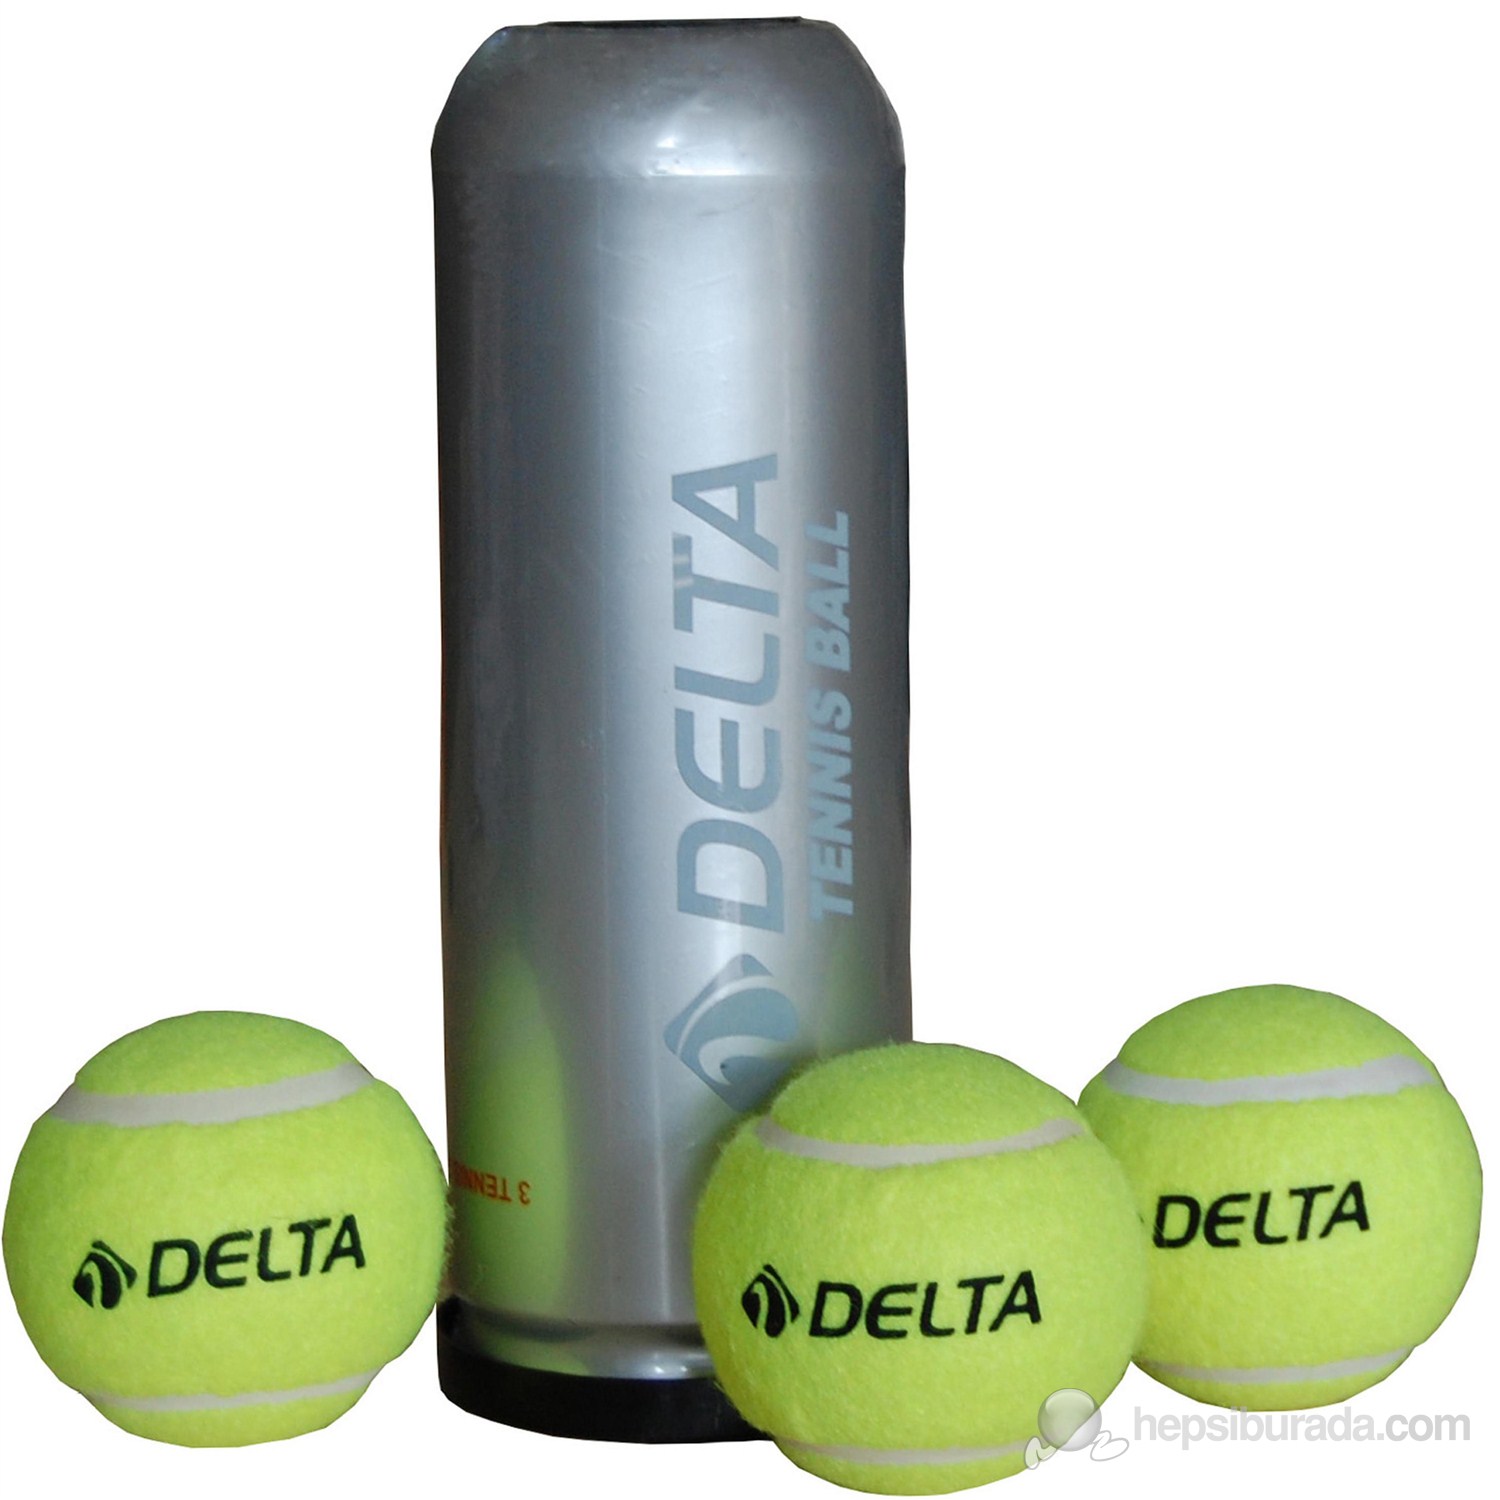 Delta 3 Lü Vakumlu Tüpte Tenis Topu - Dtb 6446